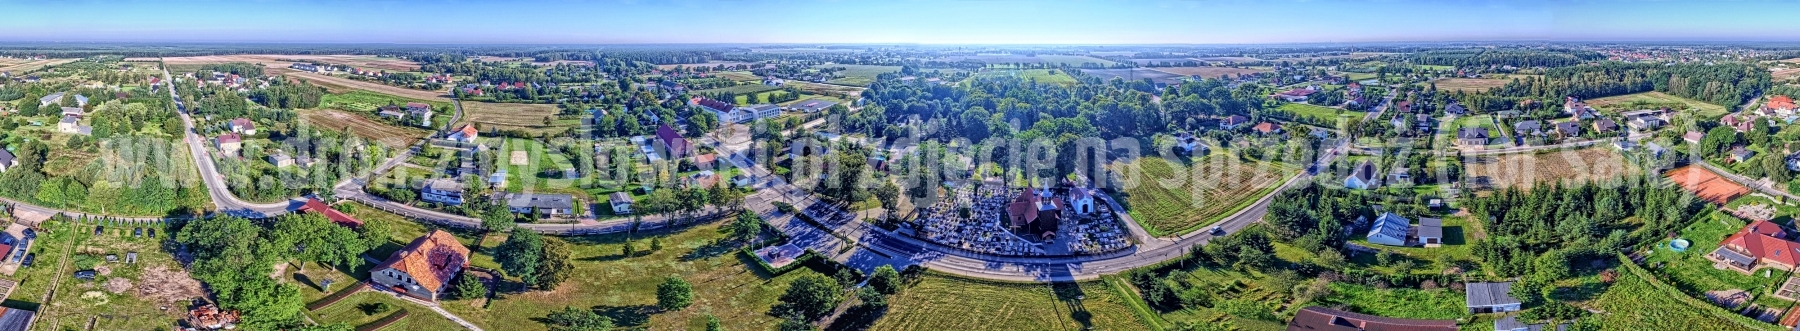 2016-08-27-lot-dronem-w-Zoledowie-nad-kosciolem_002_031_HDR_panorama_obrobiona